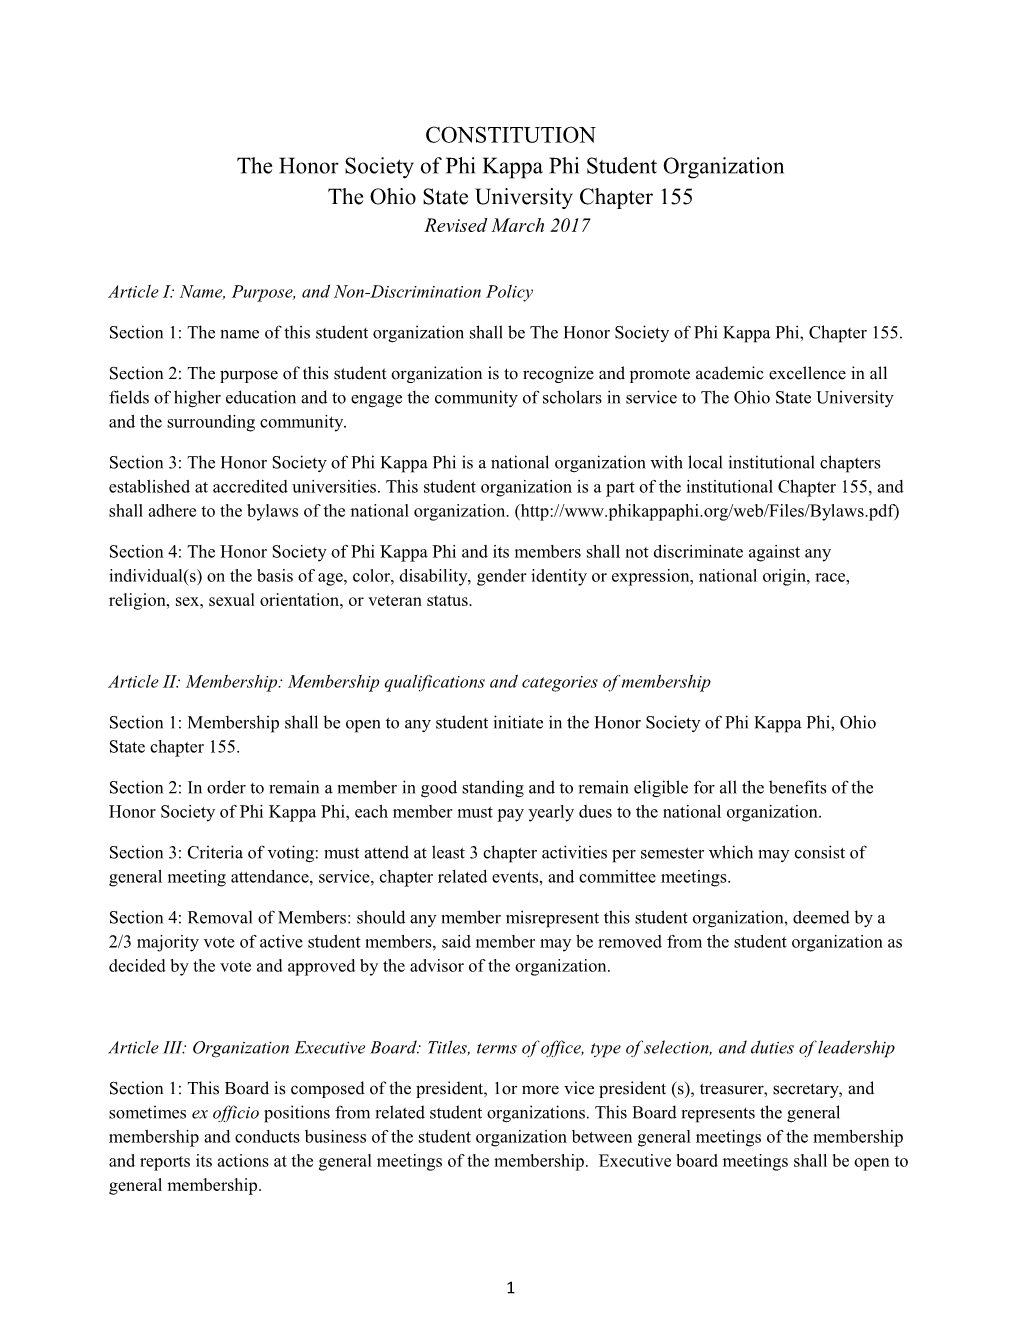 The Honor Society of Phi Kappa Phi Student Organization